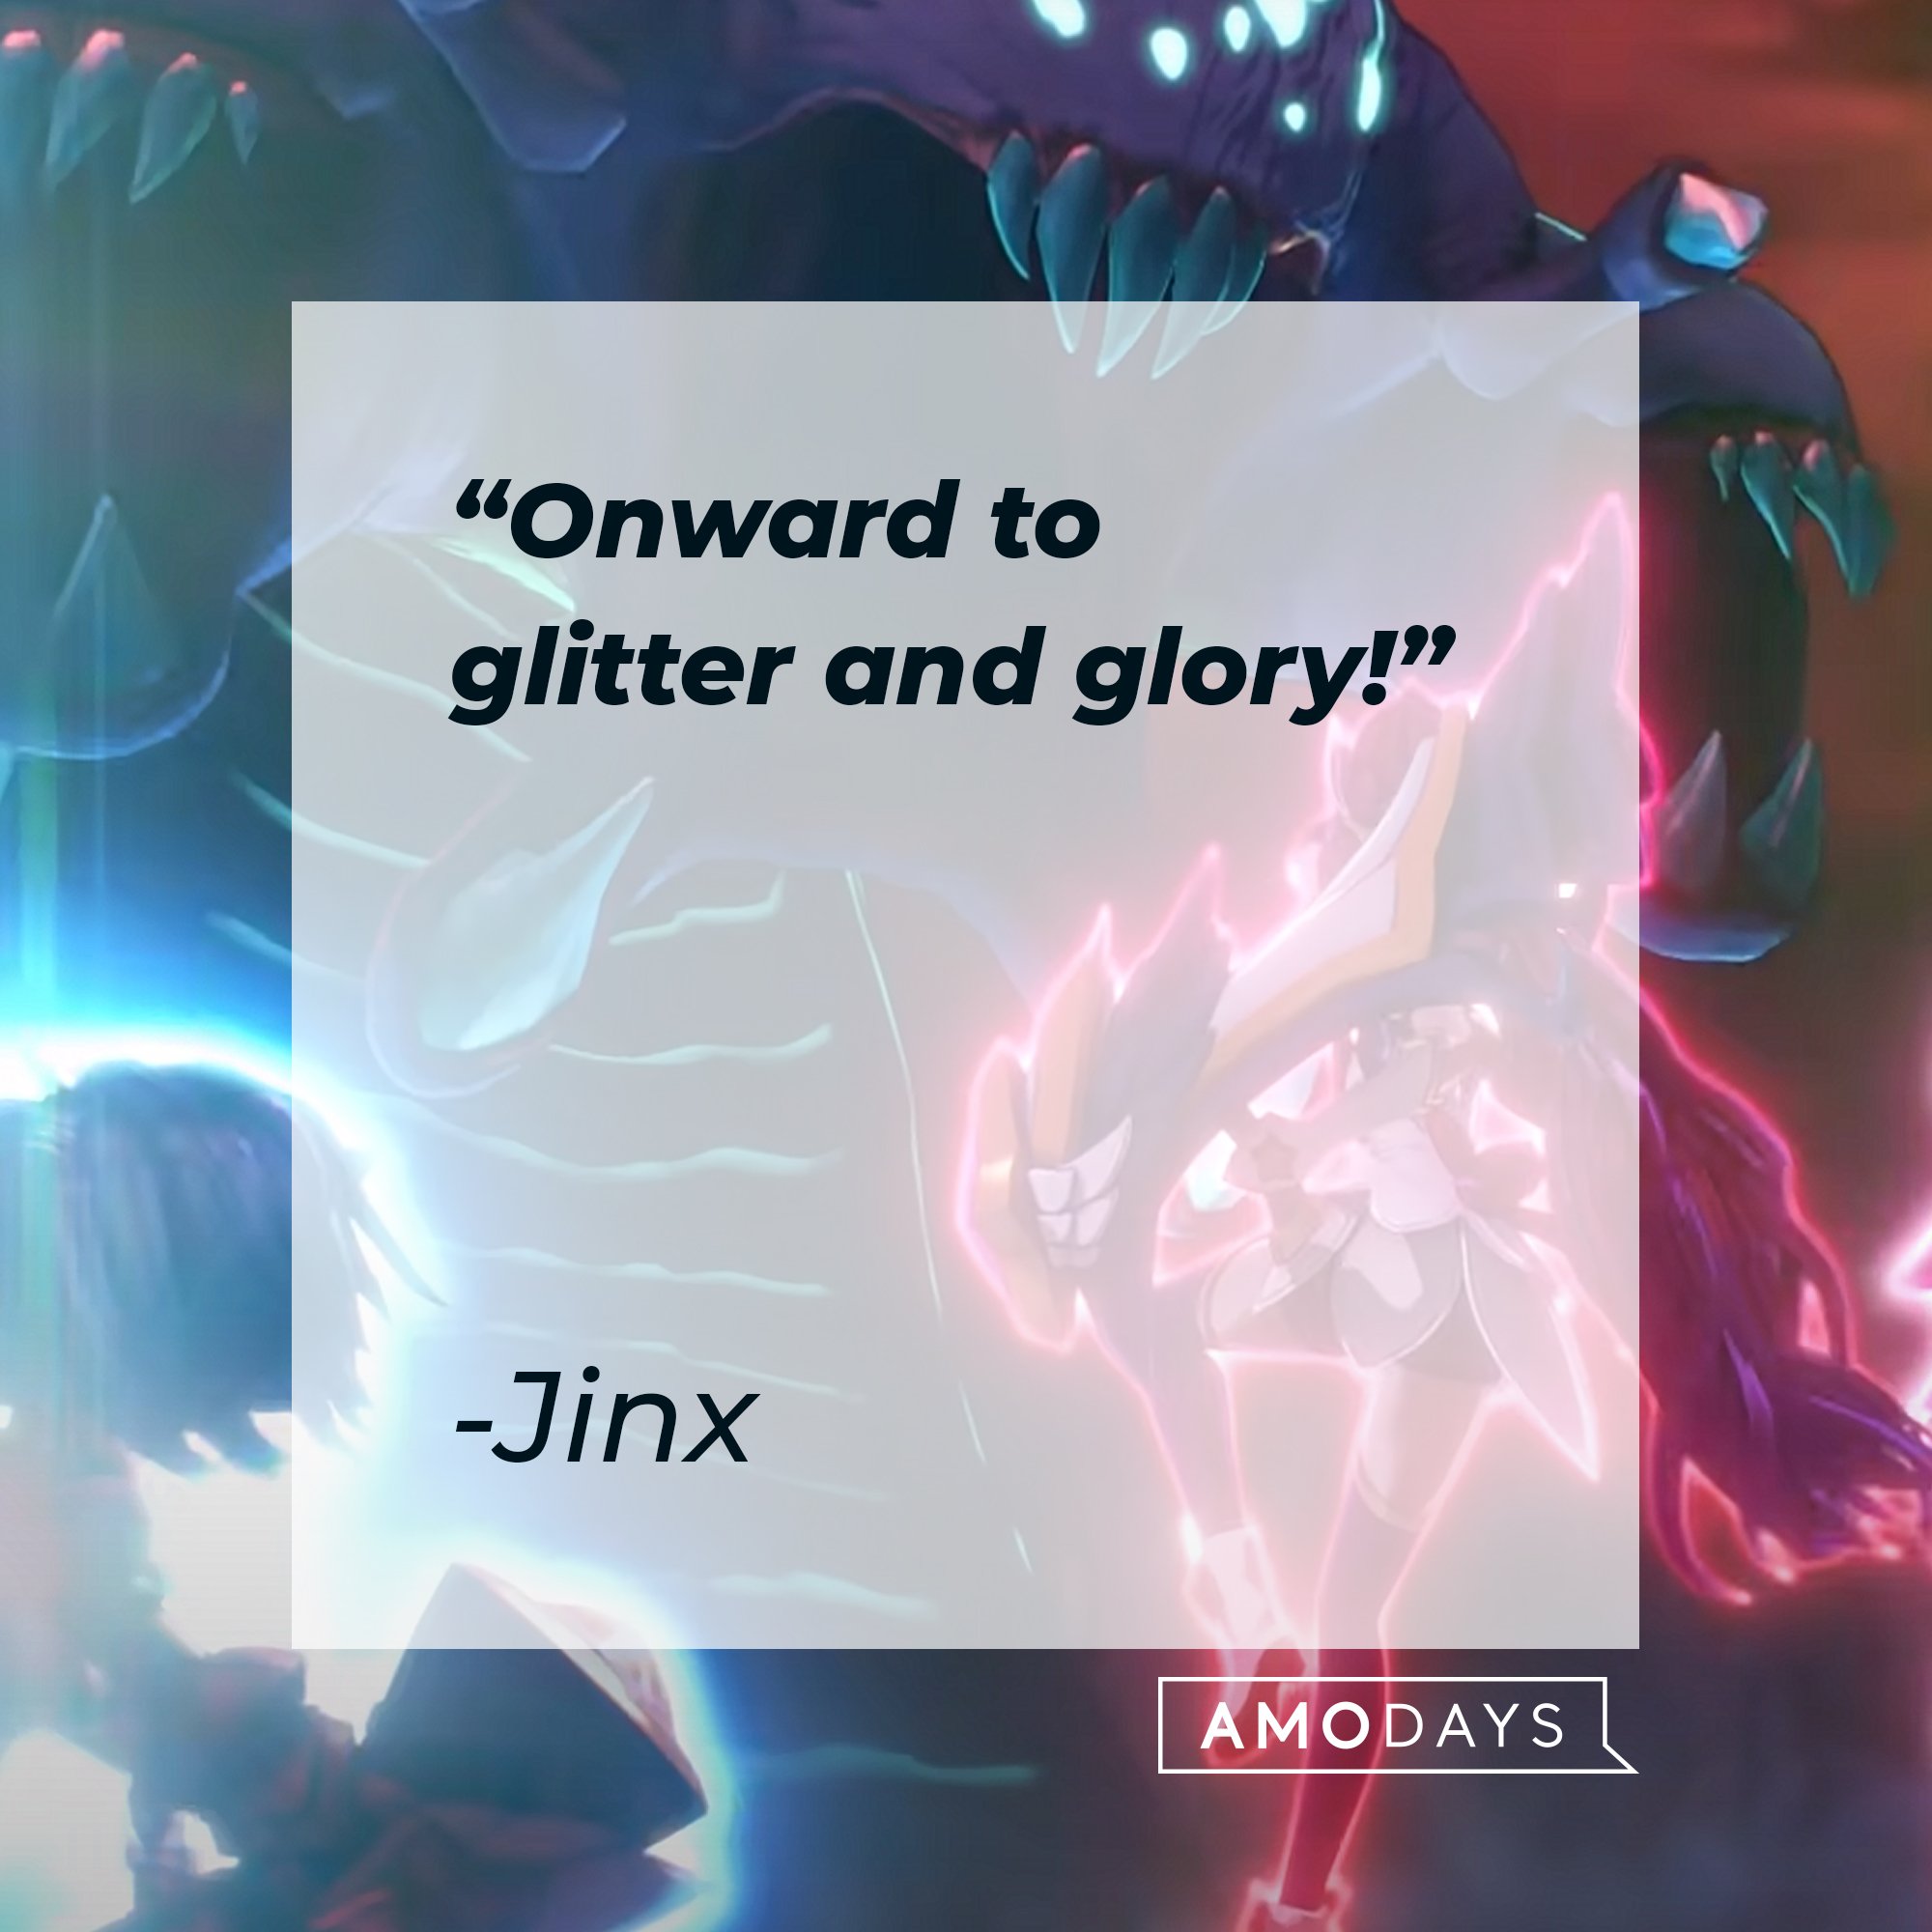 Jinx's quote: "Onward to glitter and glory!" |  Image: AmoDays